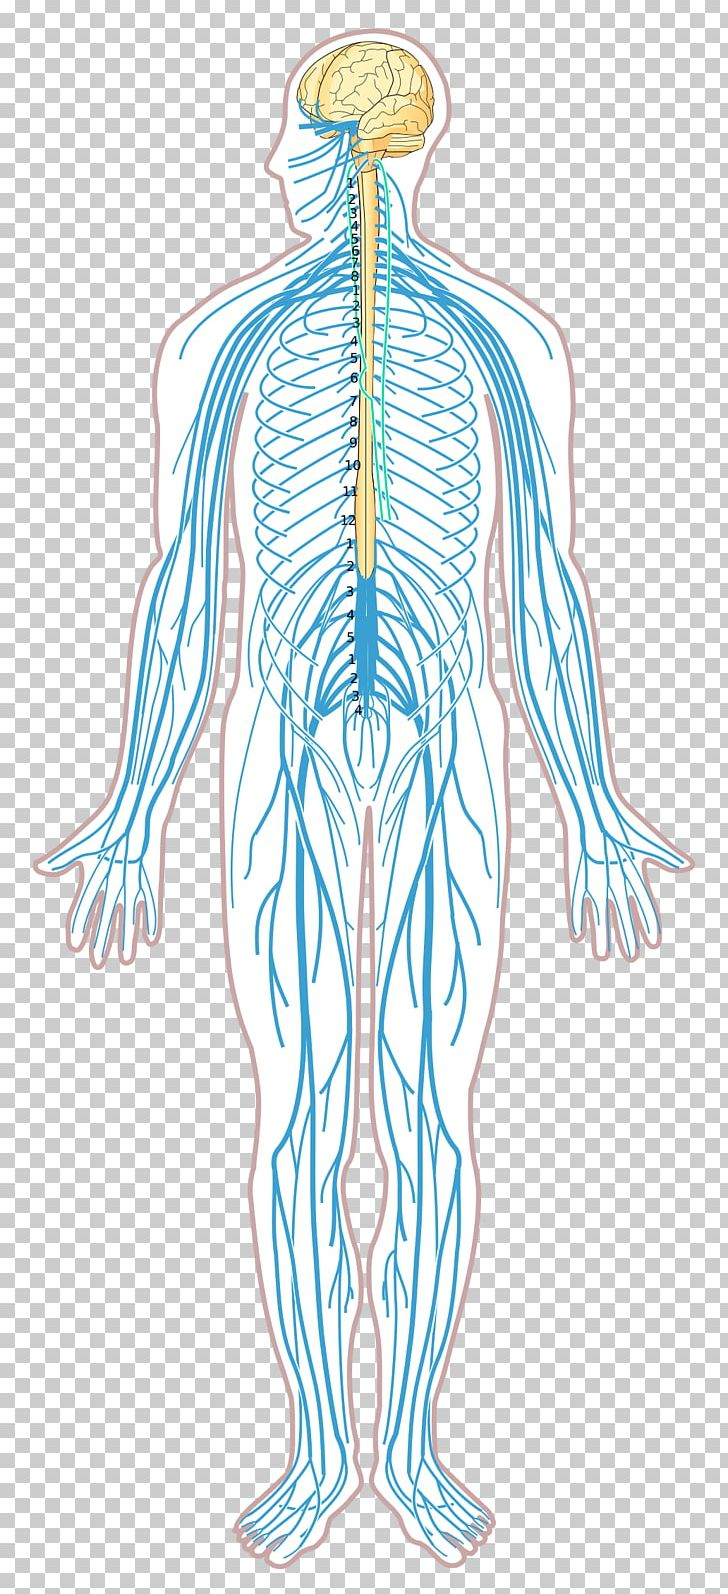 Nervous System Diagram Nervous System Disease Nerve Diagram Human Body Png Clipart